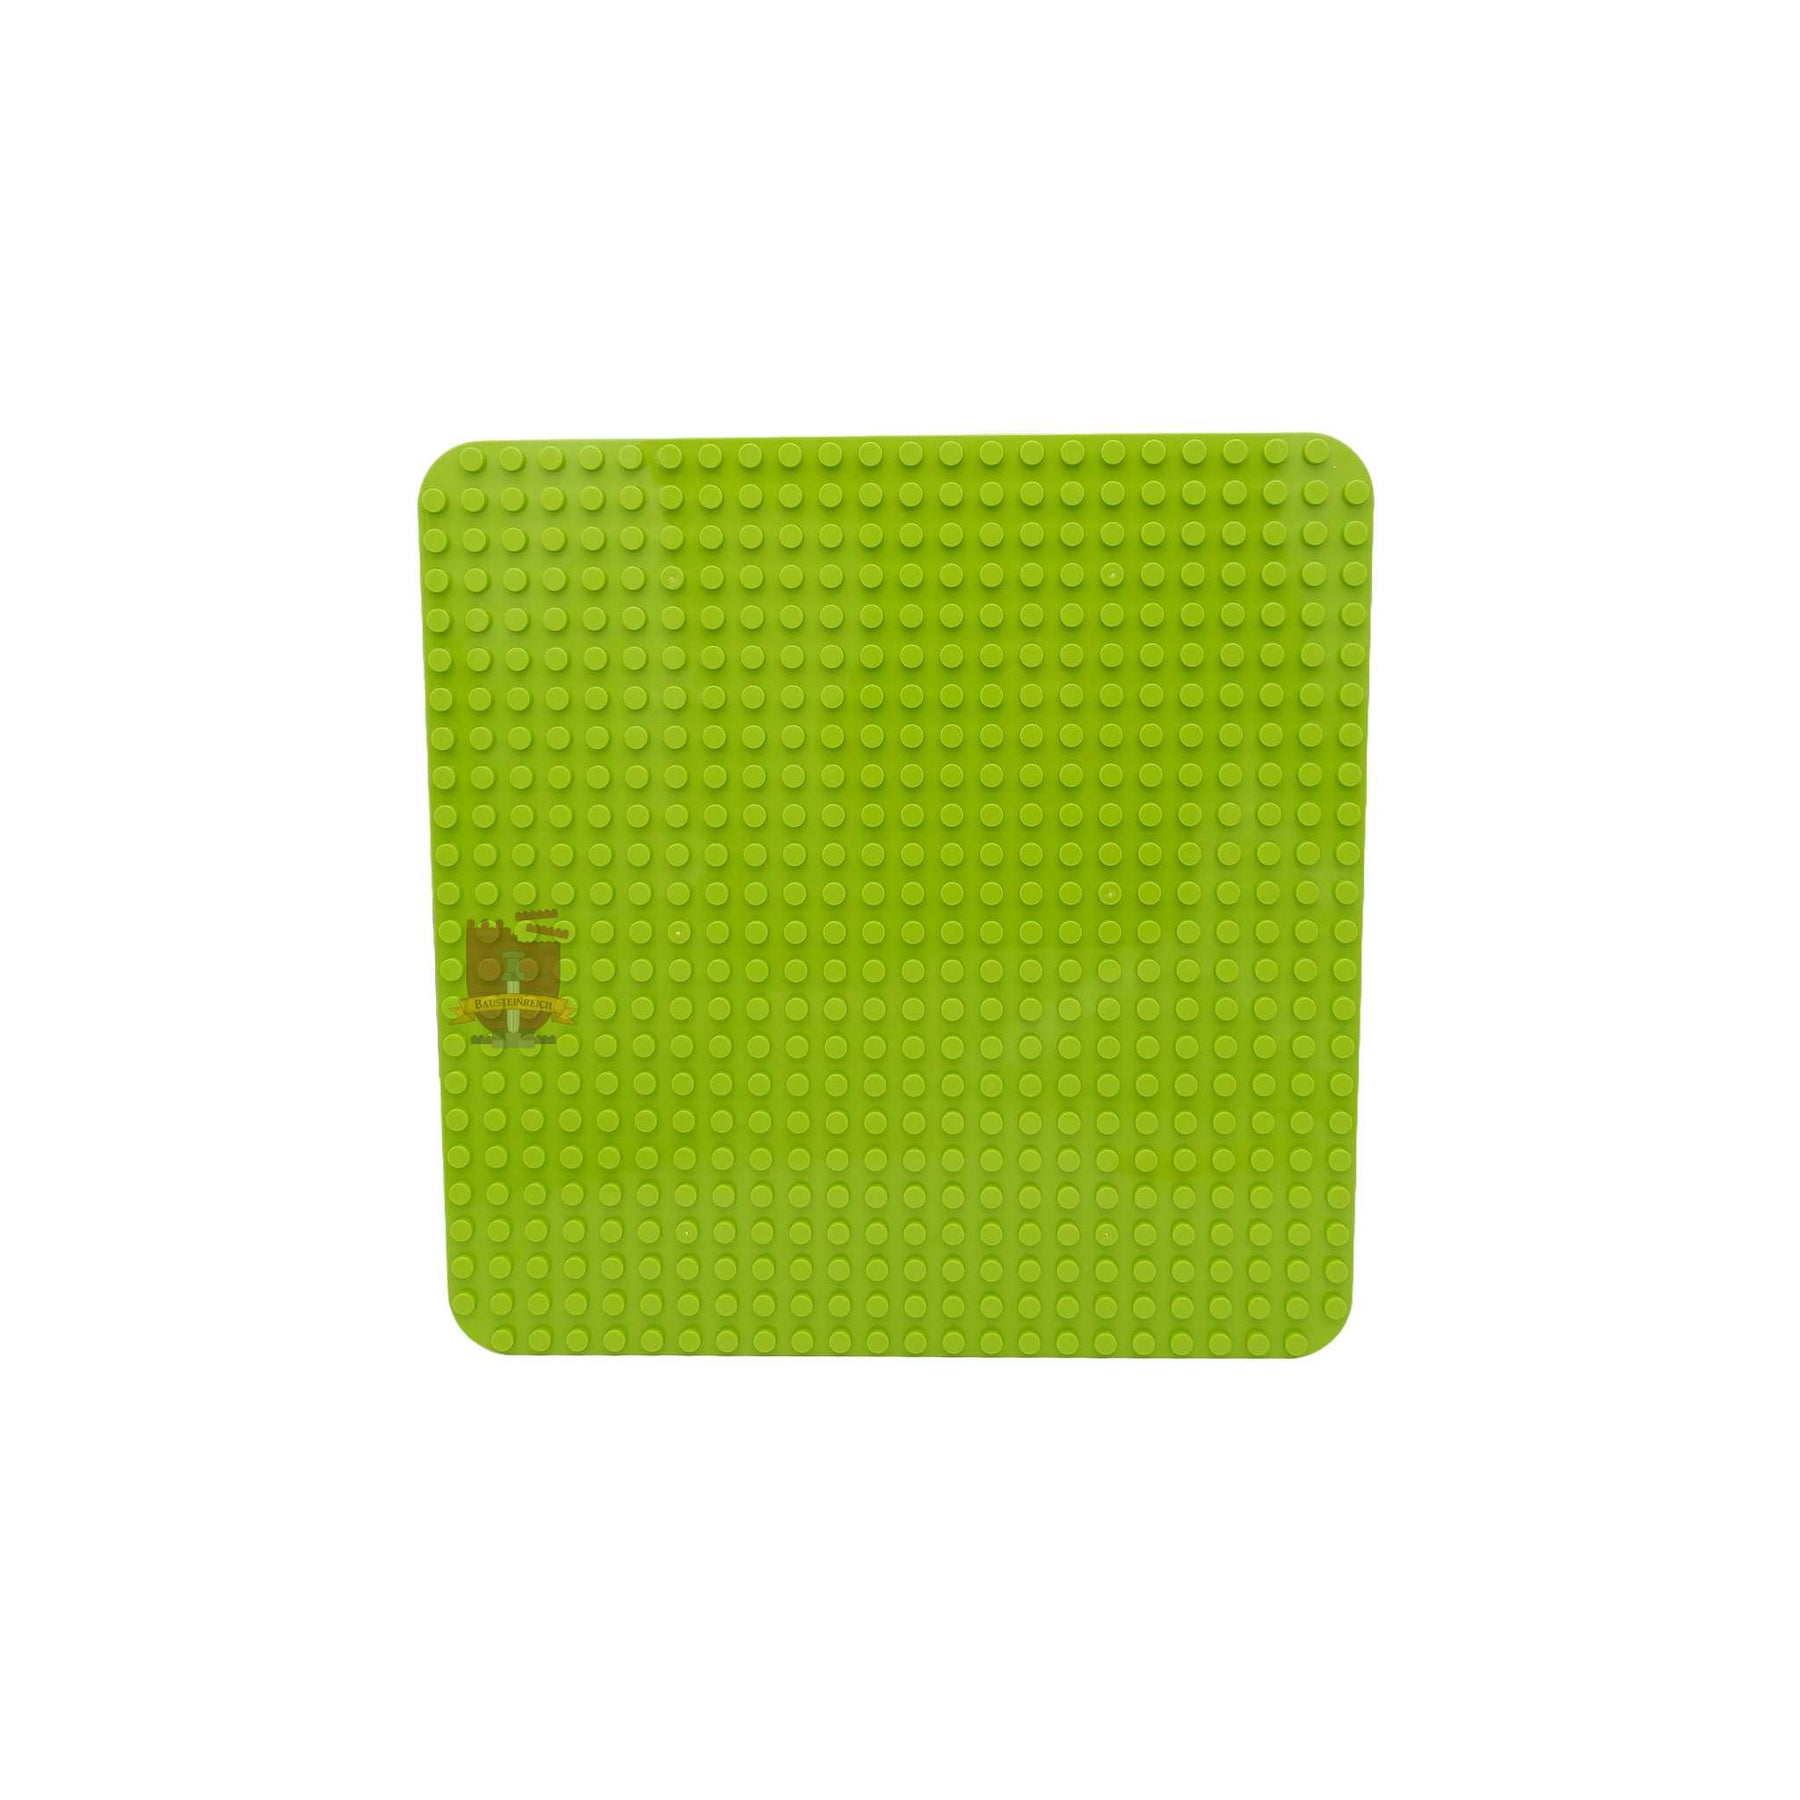 AA0085 - Große Bauplatte grün 22 x 22 Noppen